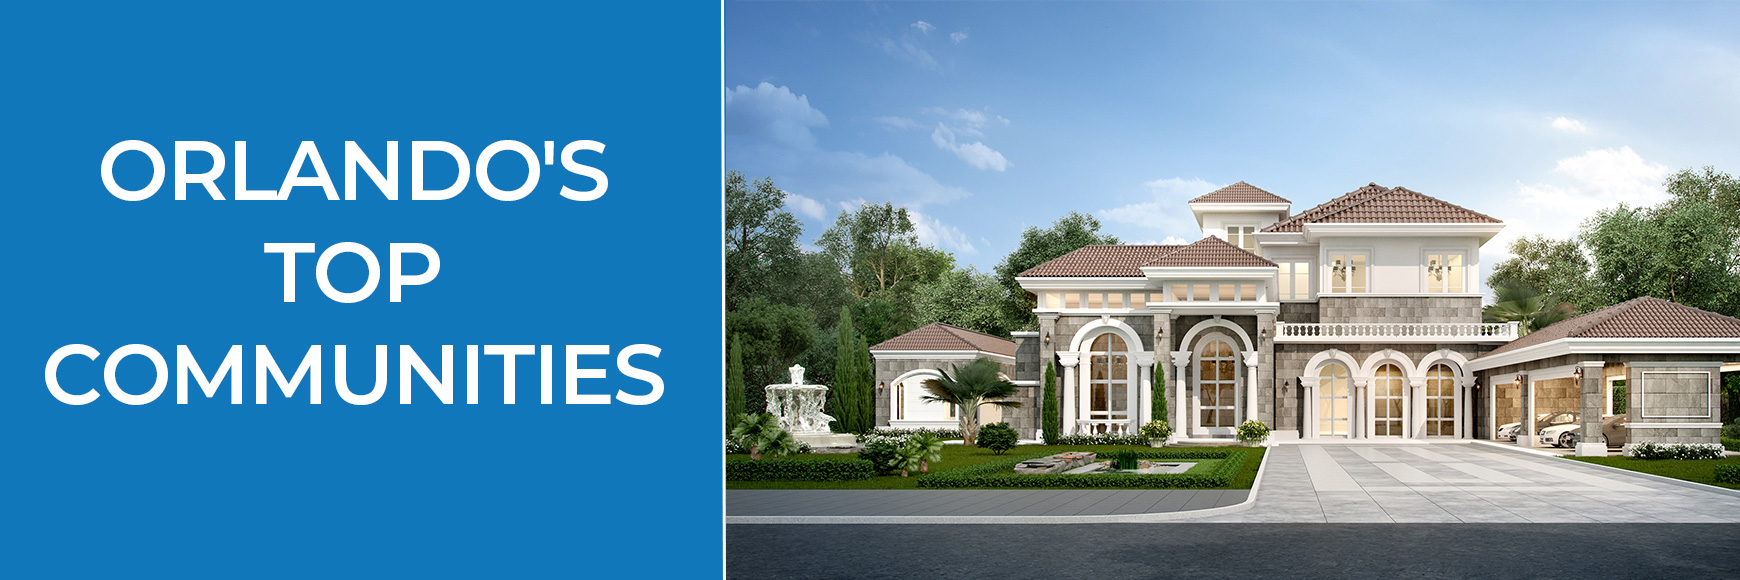 Orlando's Top Communities-Orlando Real Estate